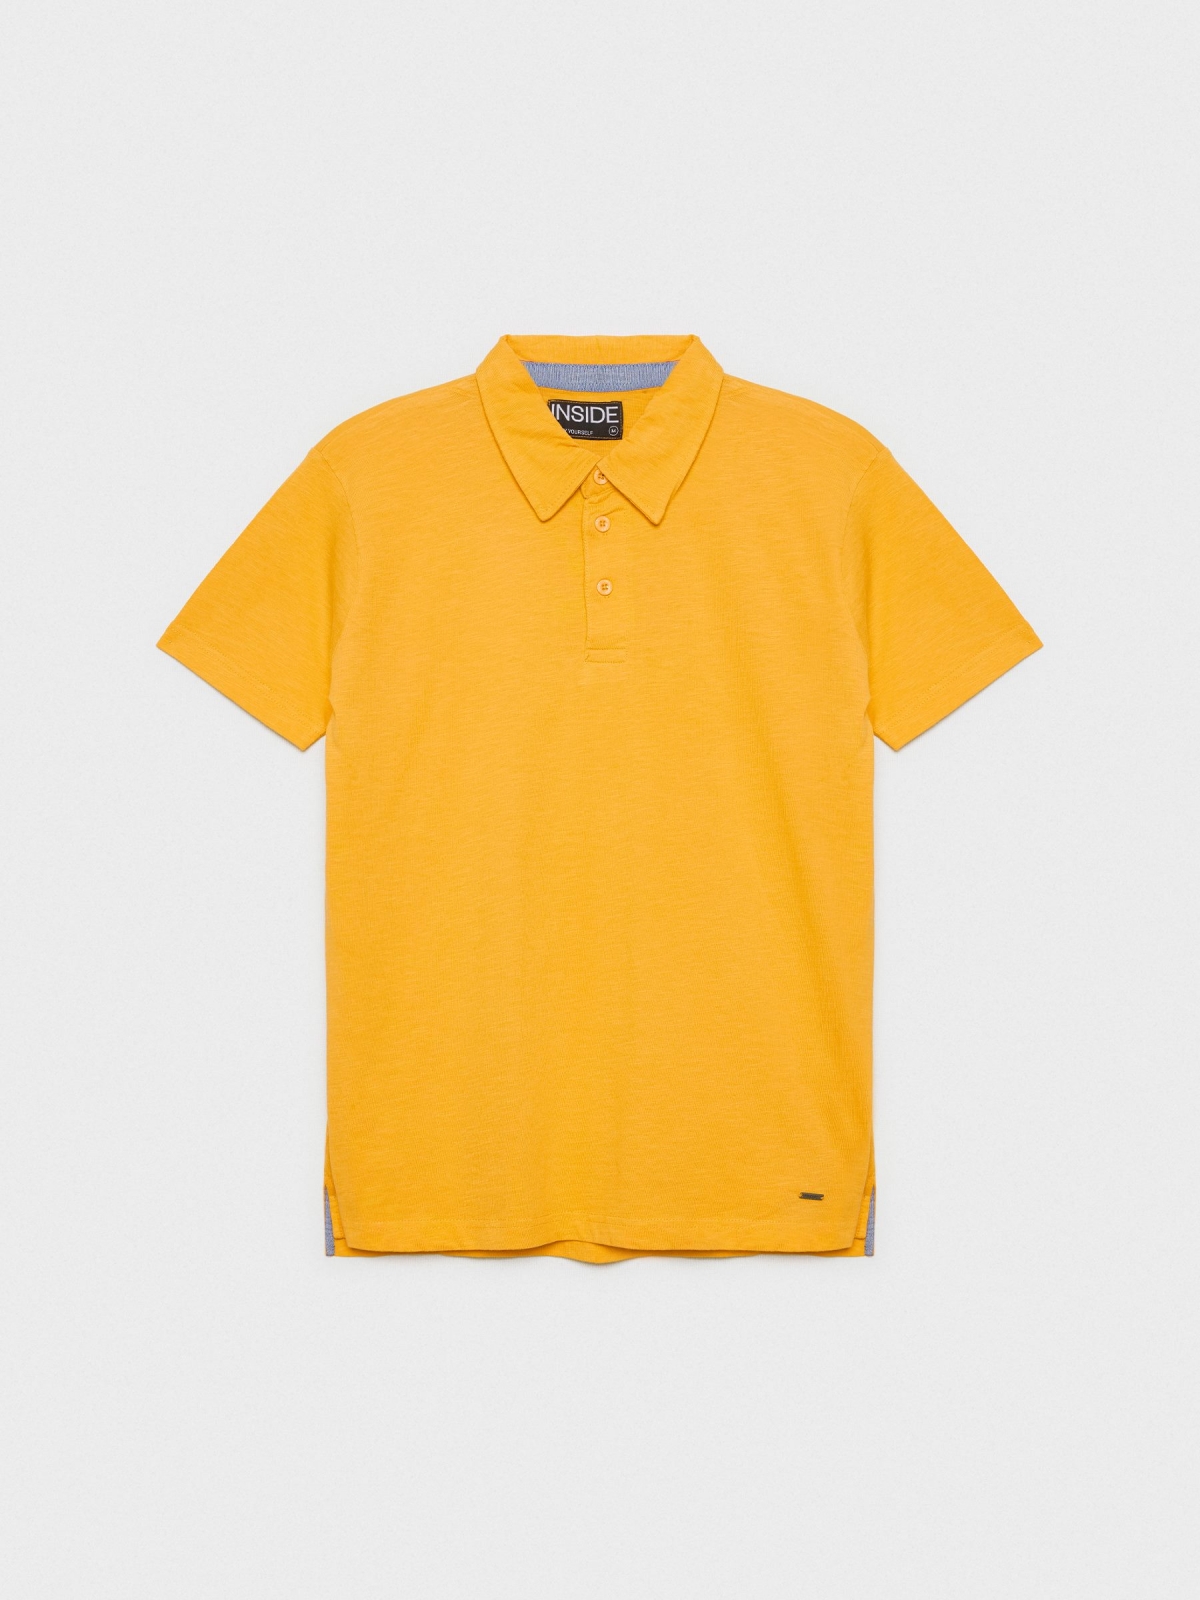  Basic polo shirt classic collar ochre